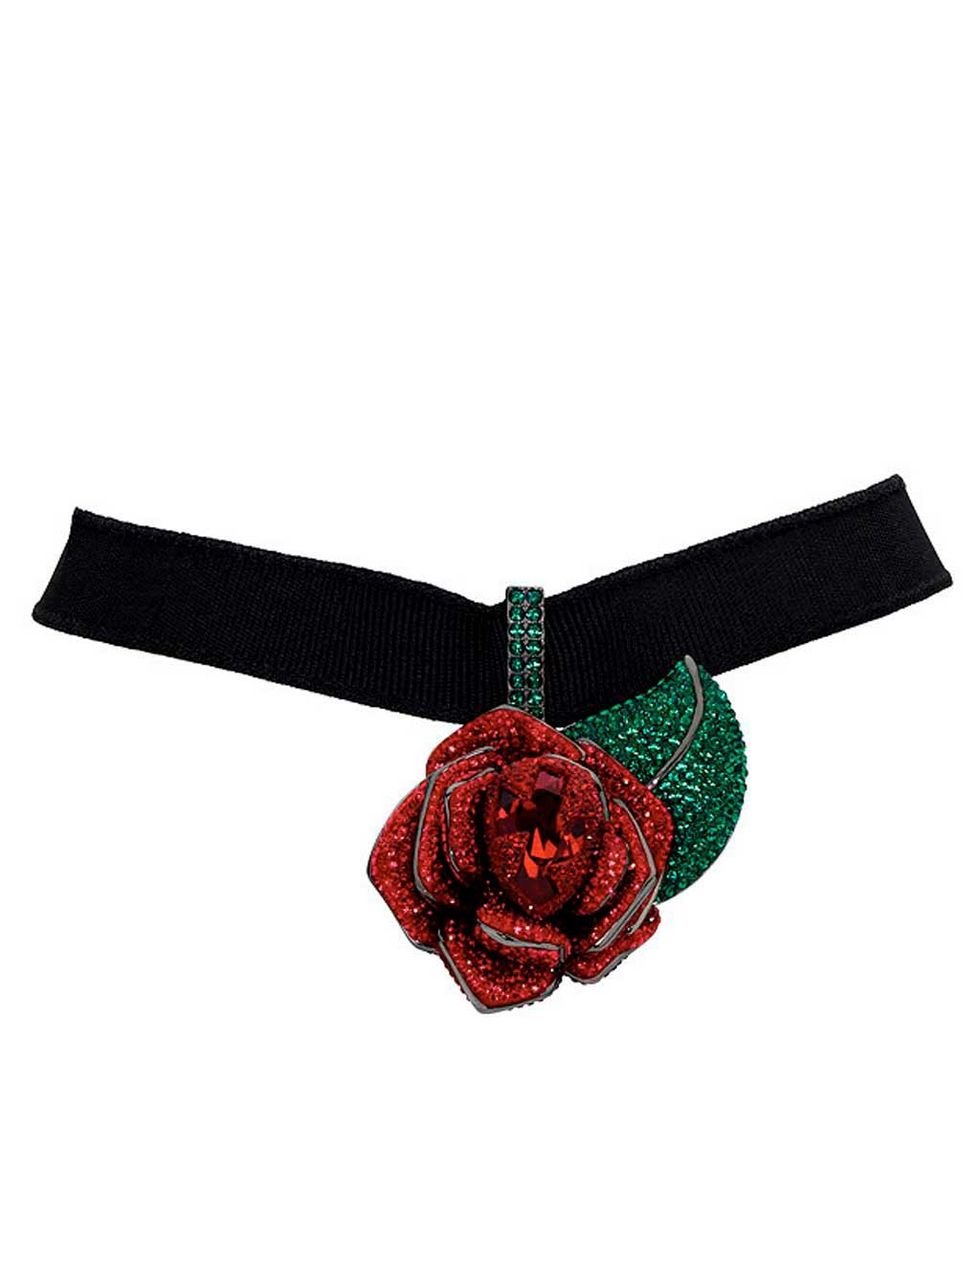 Costume accessory, Carmine, Symbol, Ribbon, Wing, Coquelicot, Knot, Embellishment, Rose family, 